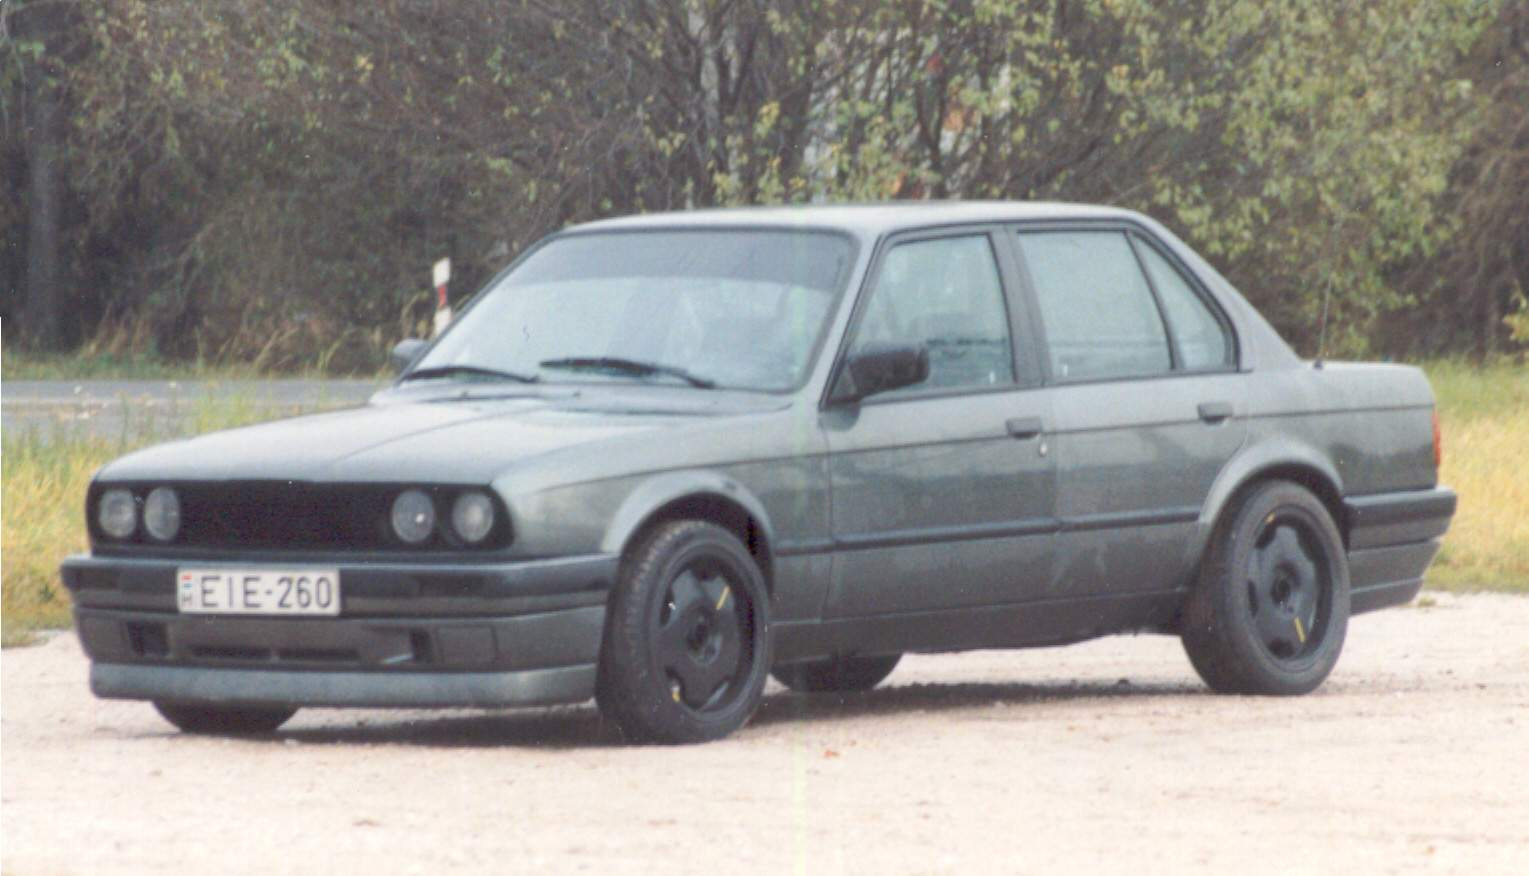 03 BMW 1